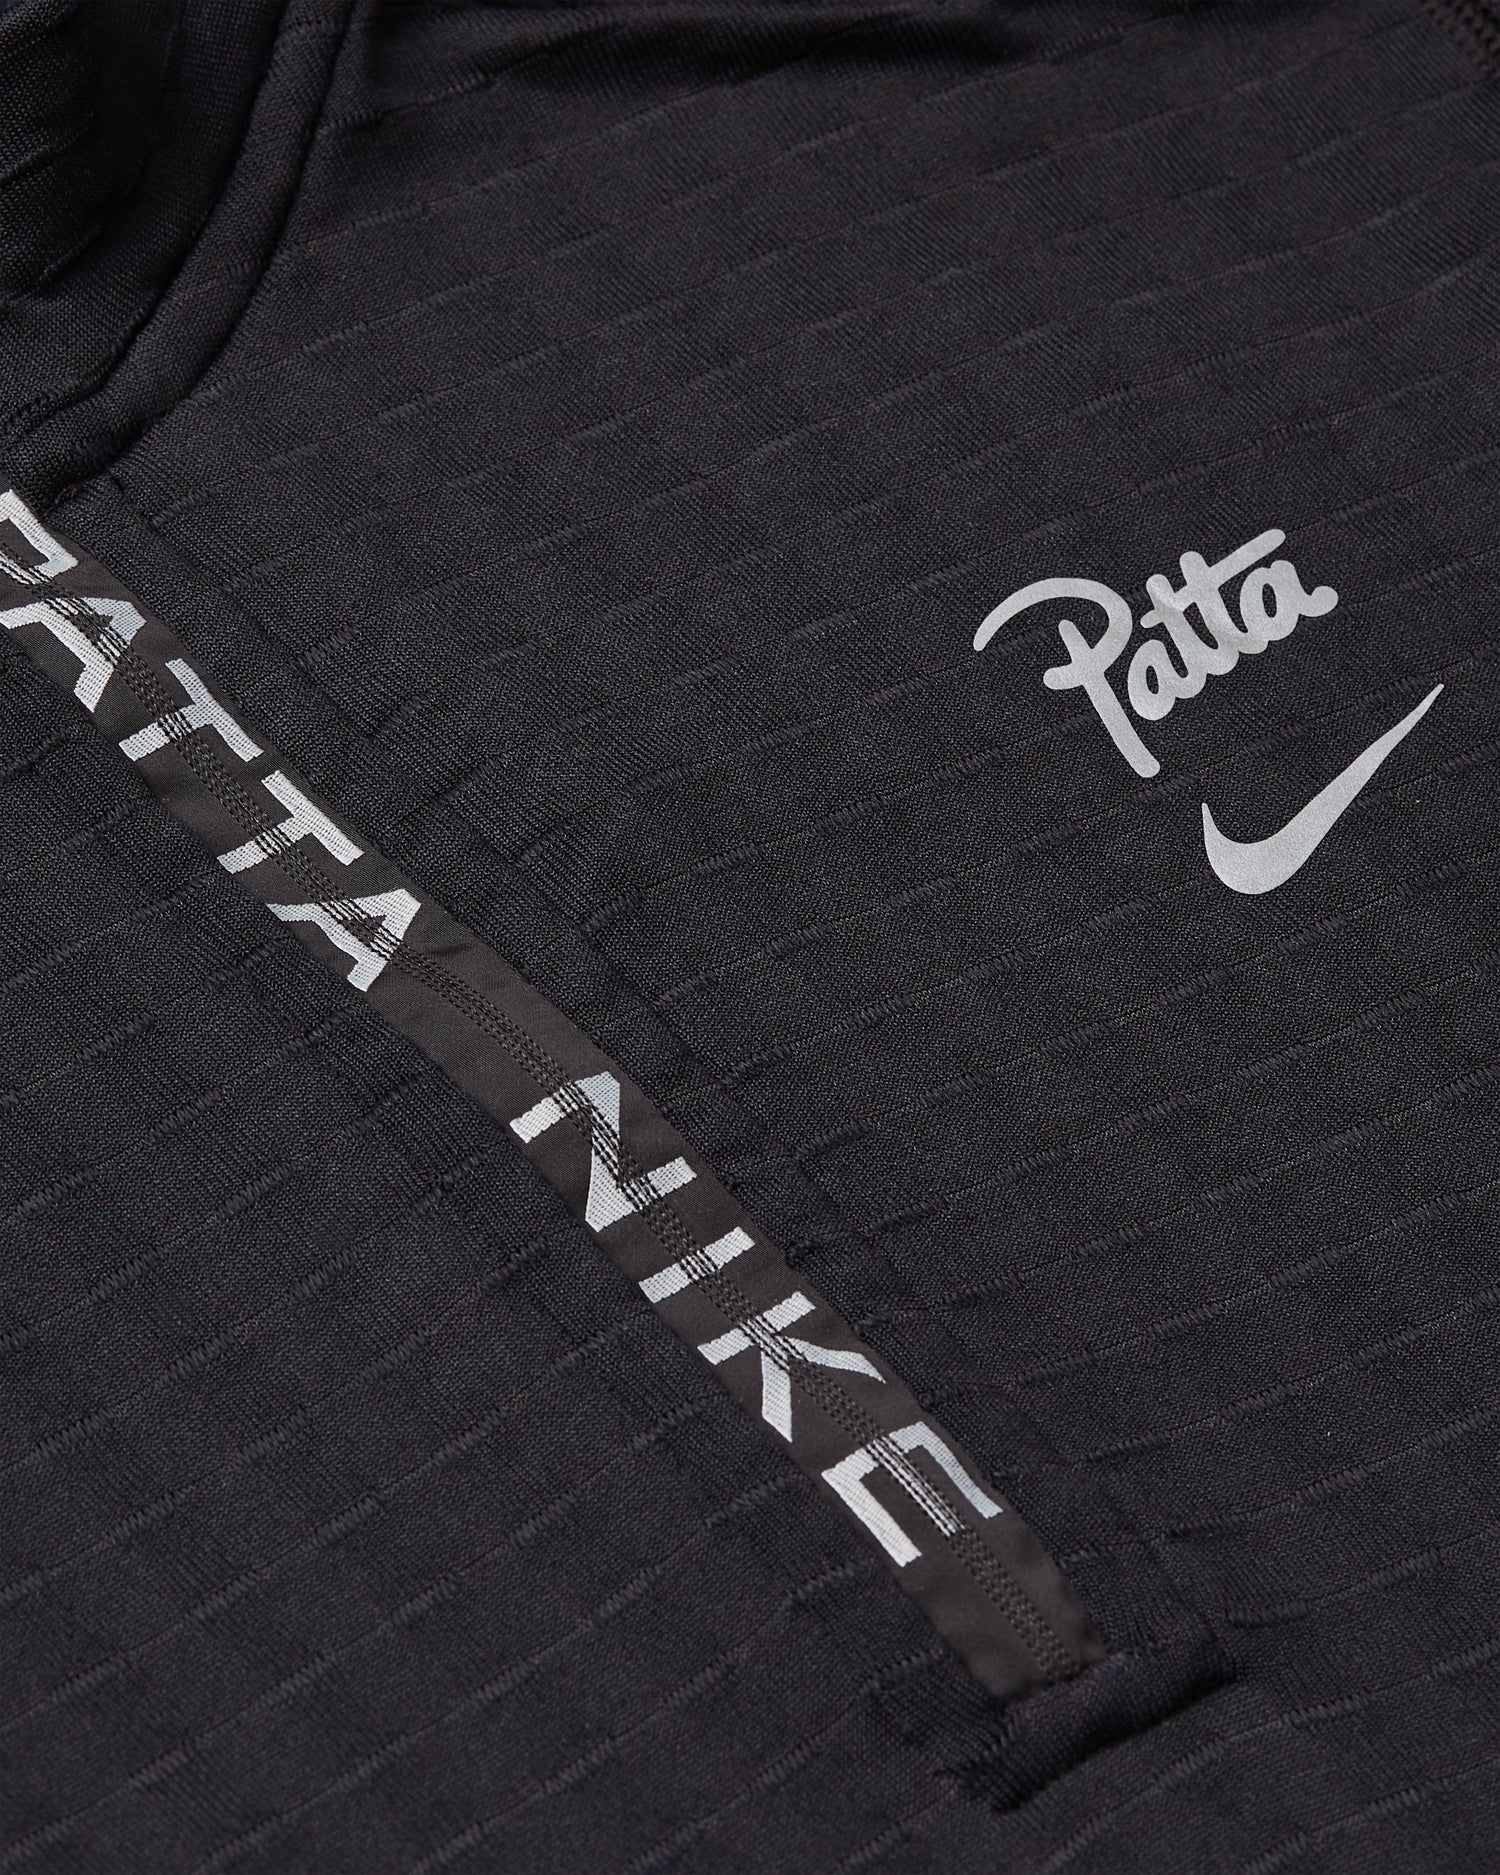 Nike x Patta Running Team Half-Zip Longsleeve (Black)